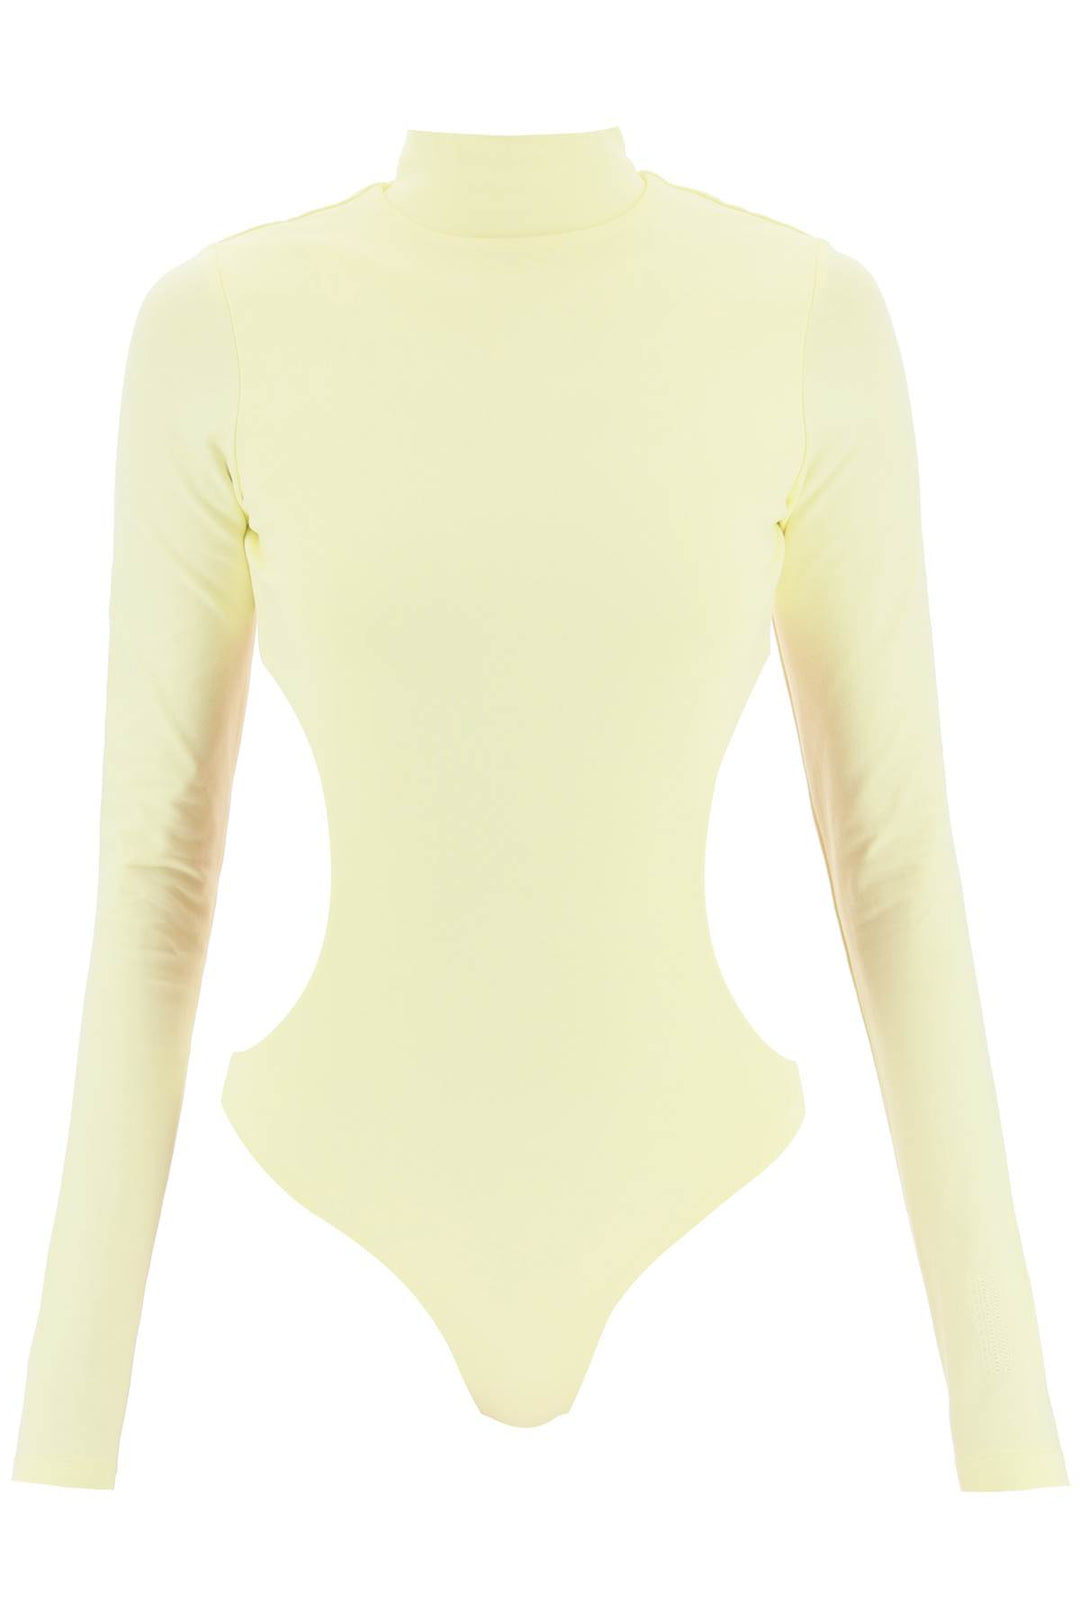 Body 'The Cutout Bodysuit' - Marc Jacobs - Donna